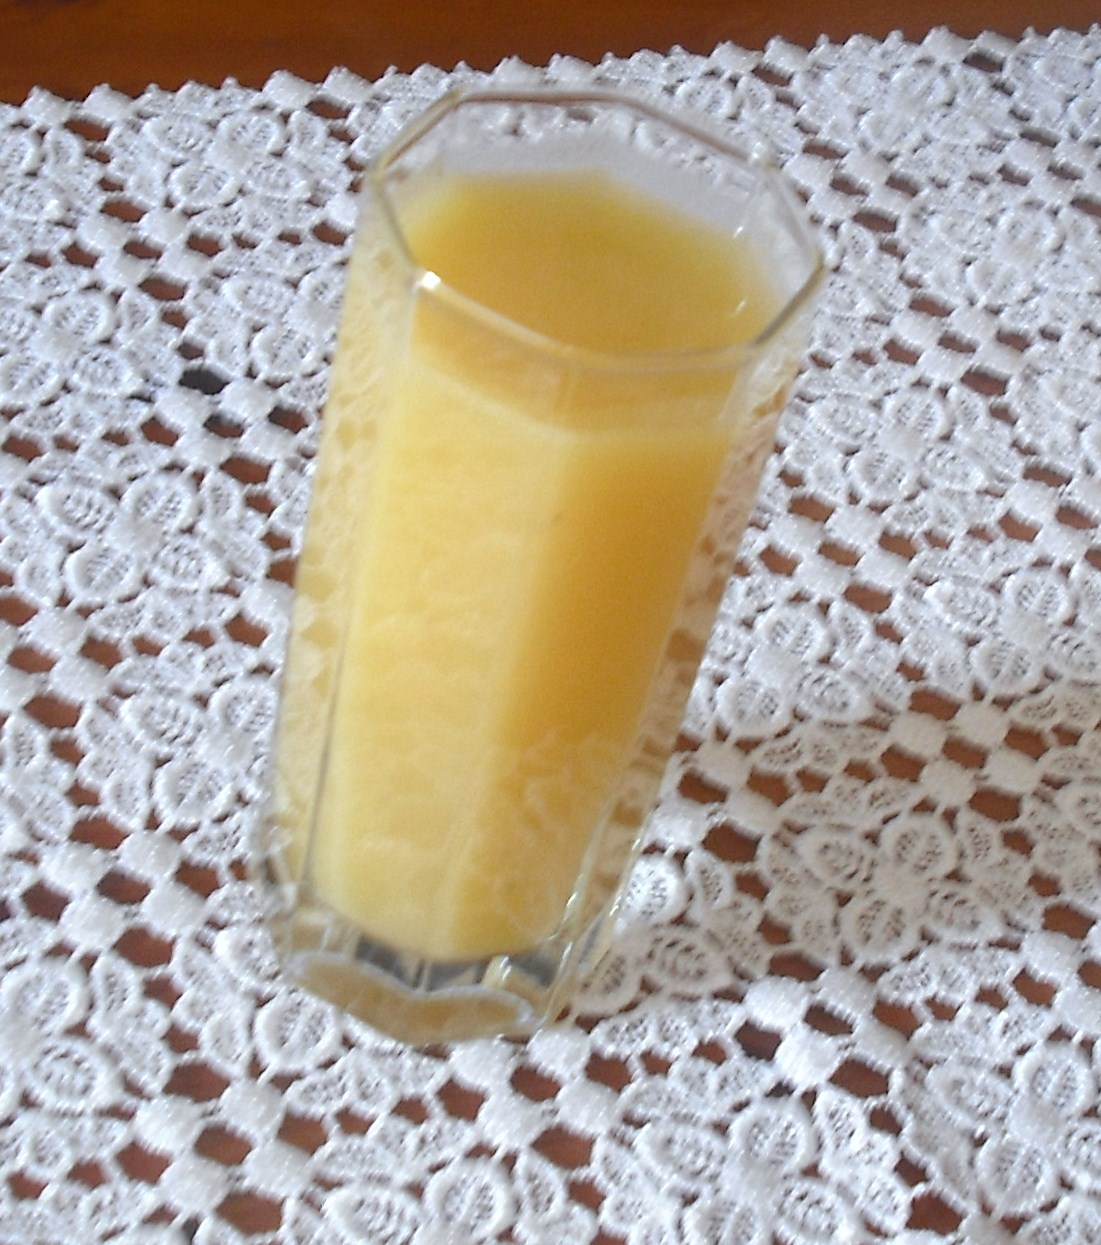 Suc de fructe(nectar)